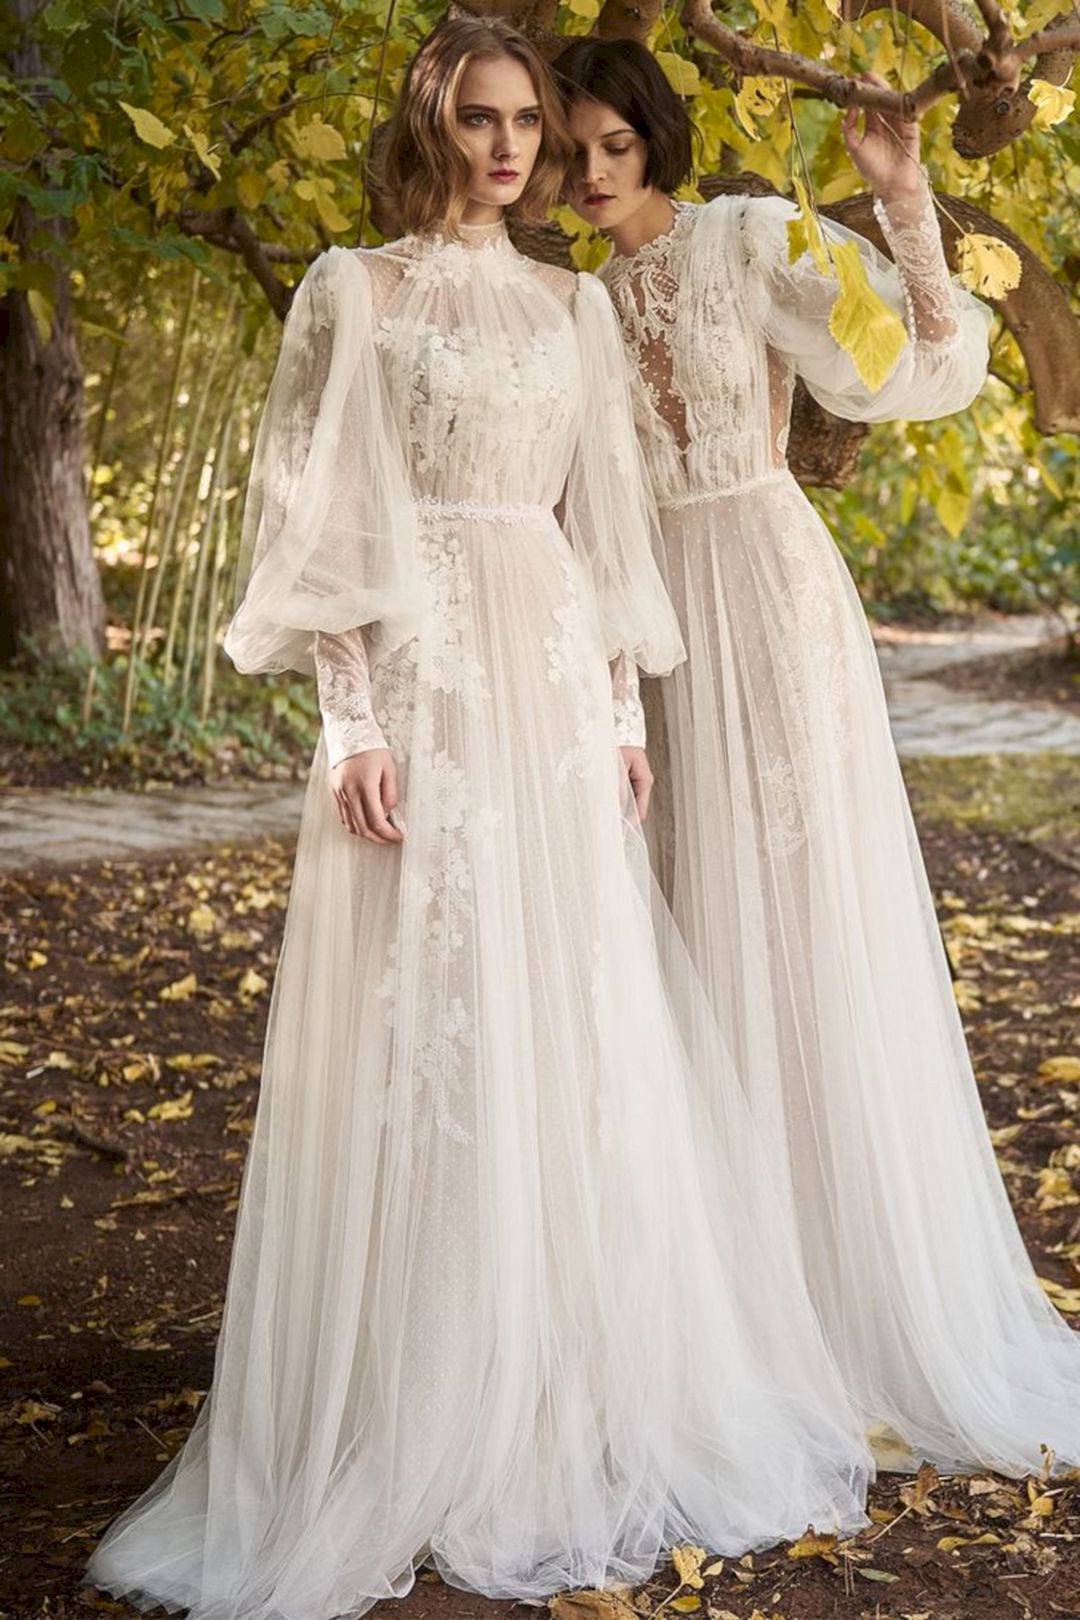 Victorian wedding dress from weddingforward